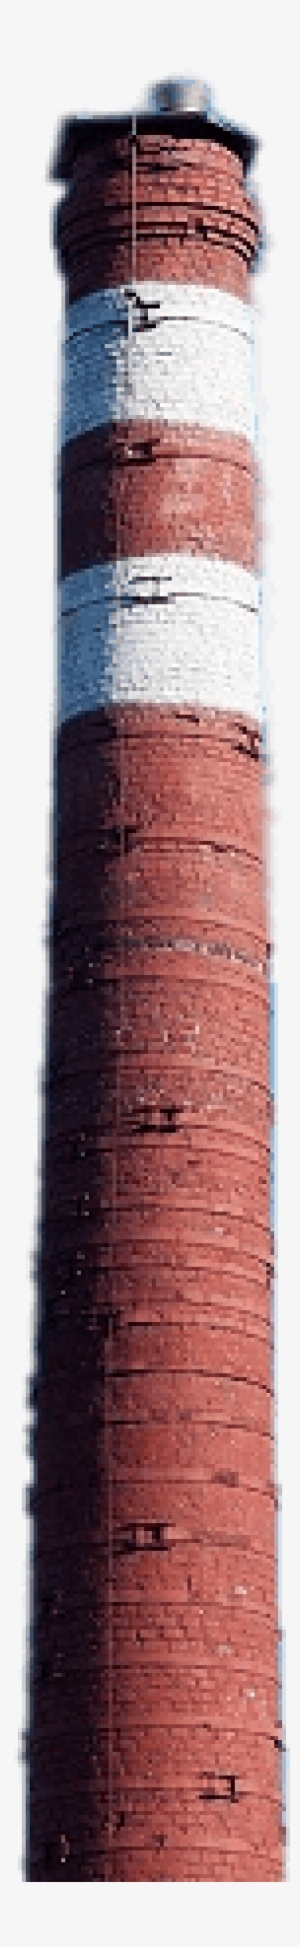 Brick Industrial Chimney - Brick